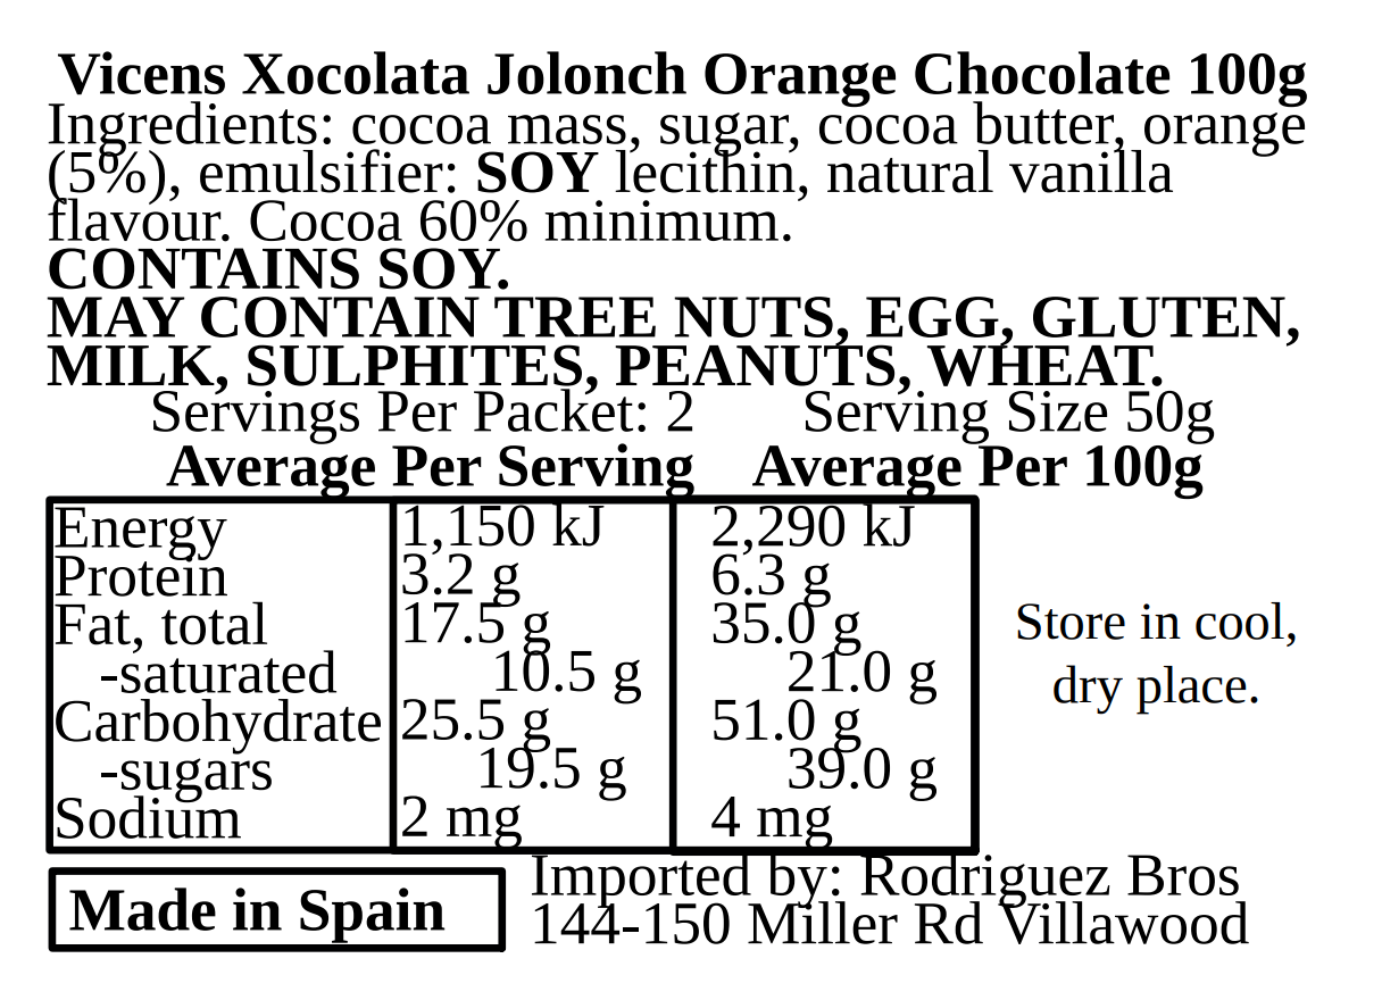 Vicens Xocolata Jolonch Chocolate Naranja Spanish Orange Chocolate 100g